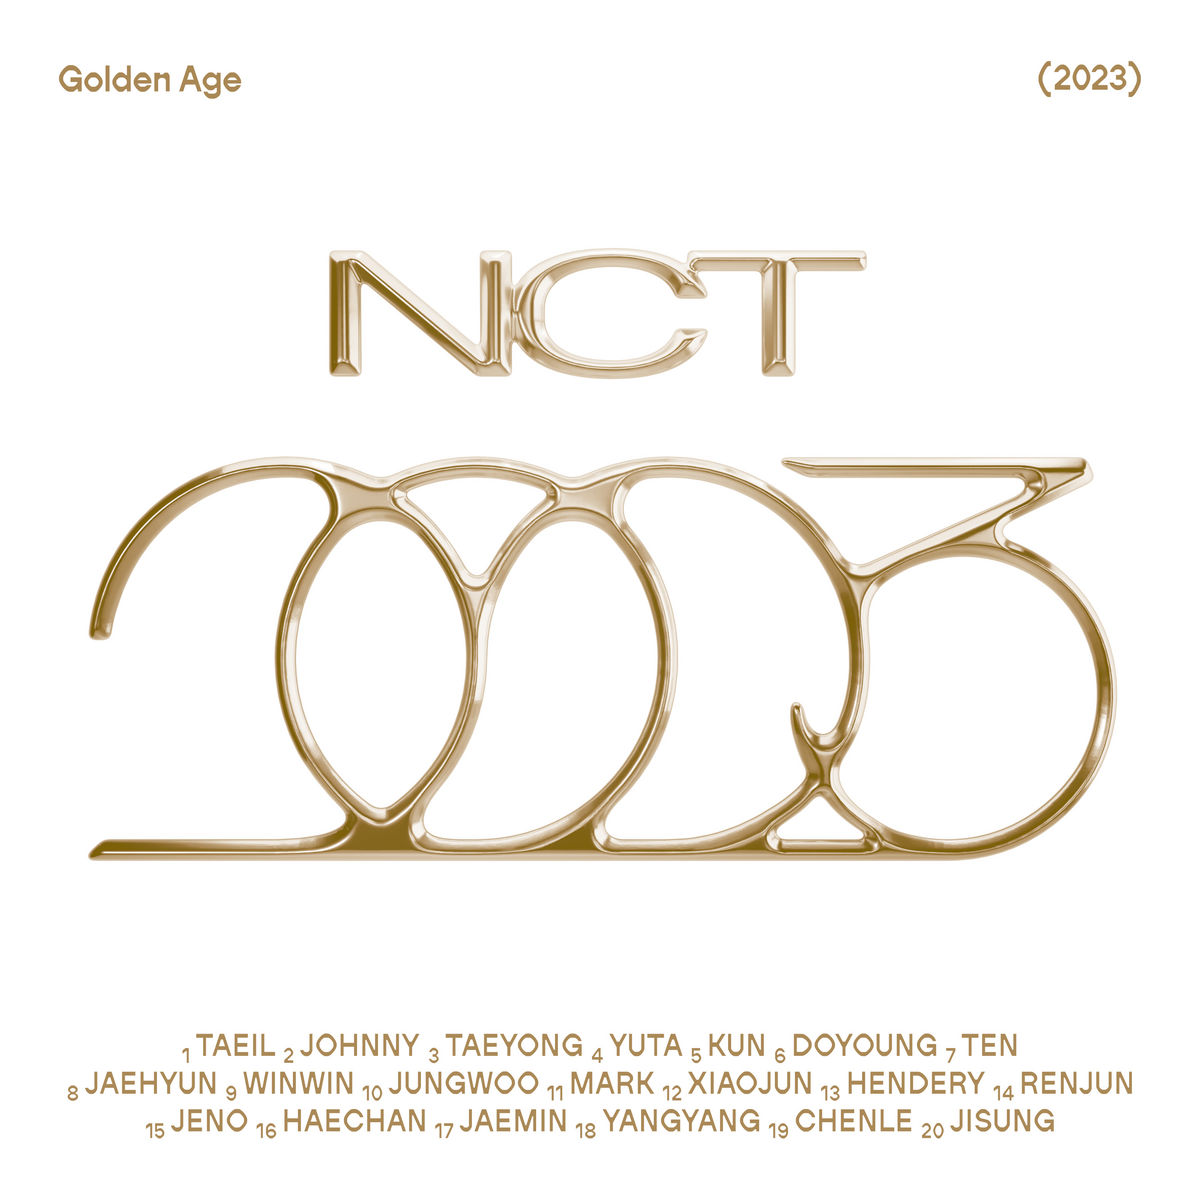 Golden Age (album) | Kpop Wiki | Fandom